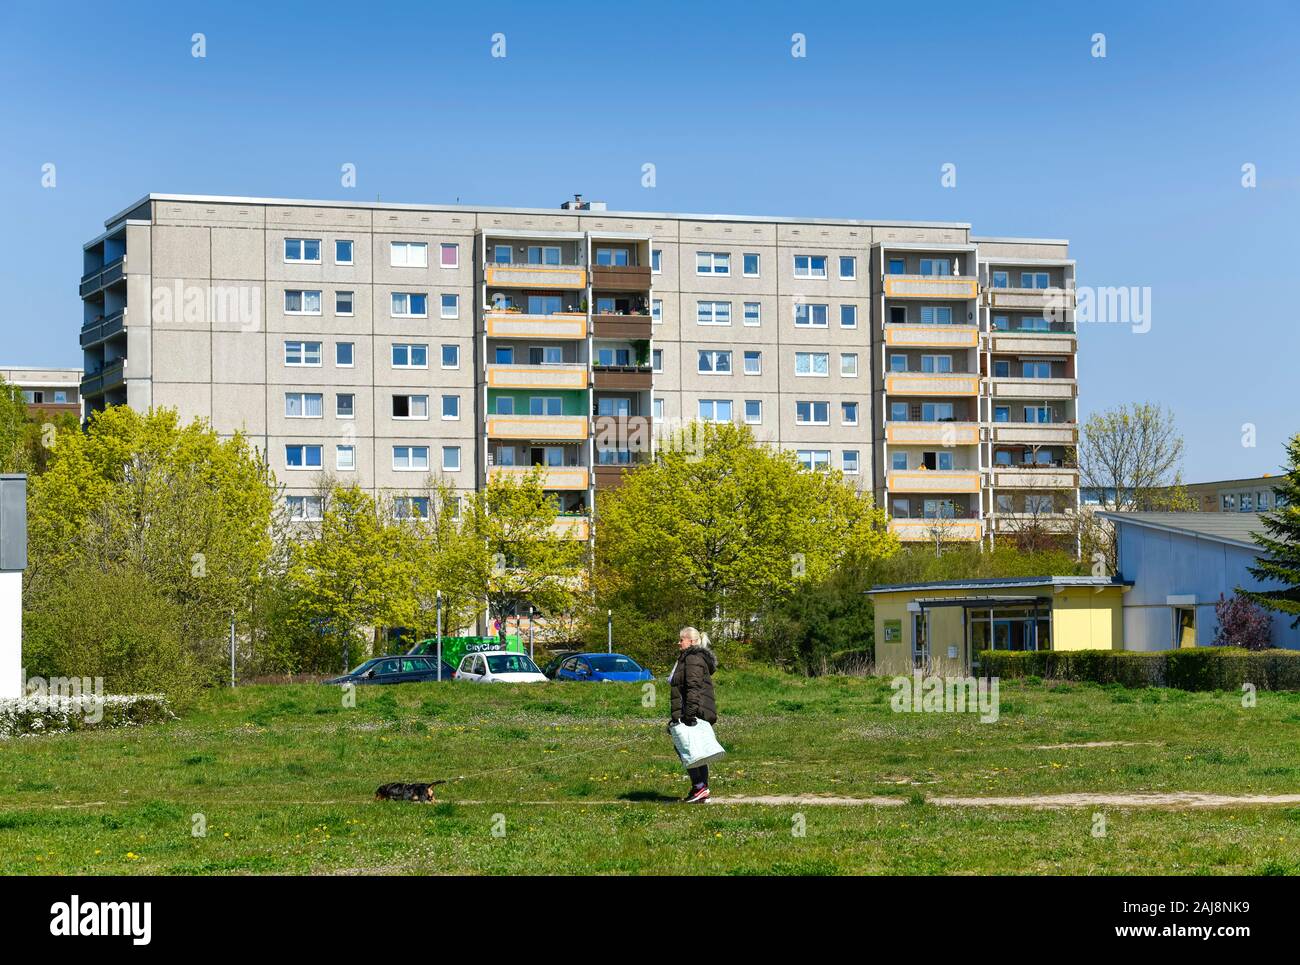 Wohnhäuser, Uranusstraße, Kosmosviertel, Altglienicke, Treptow-Köpenick, Berlin, Deutschland Stock Photo